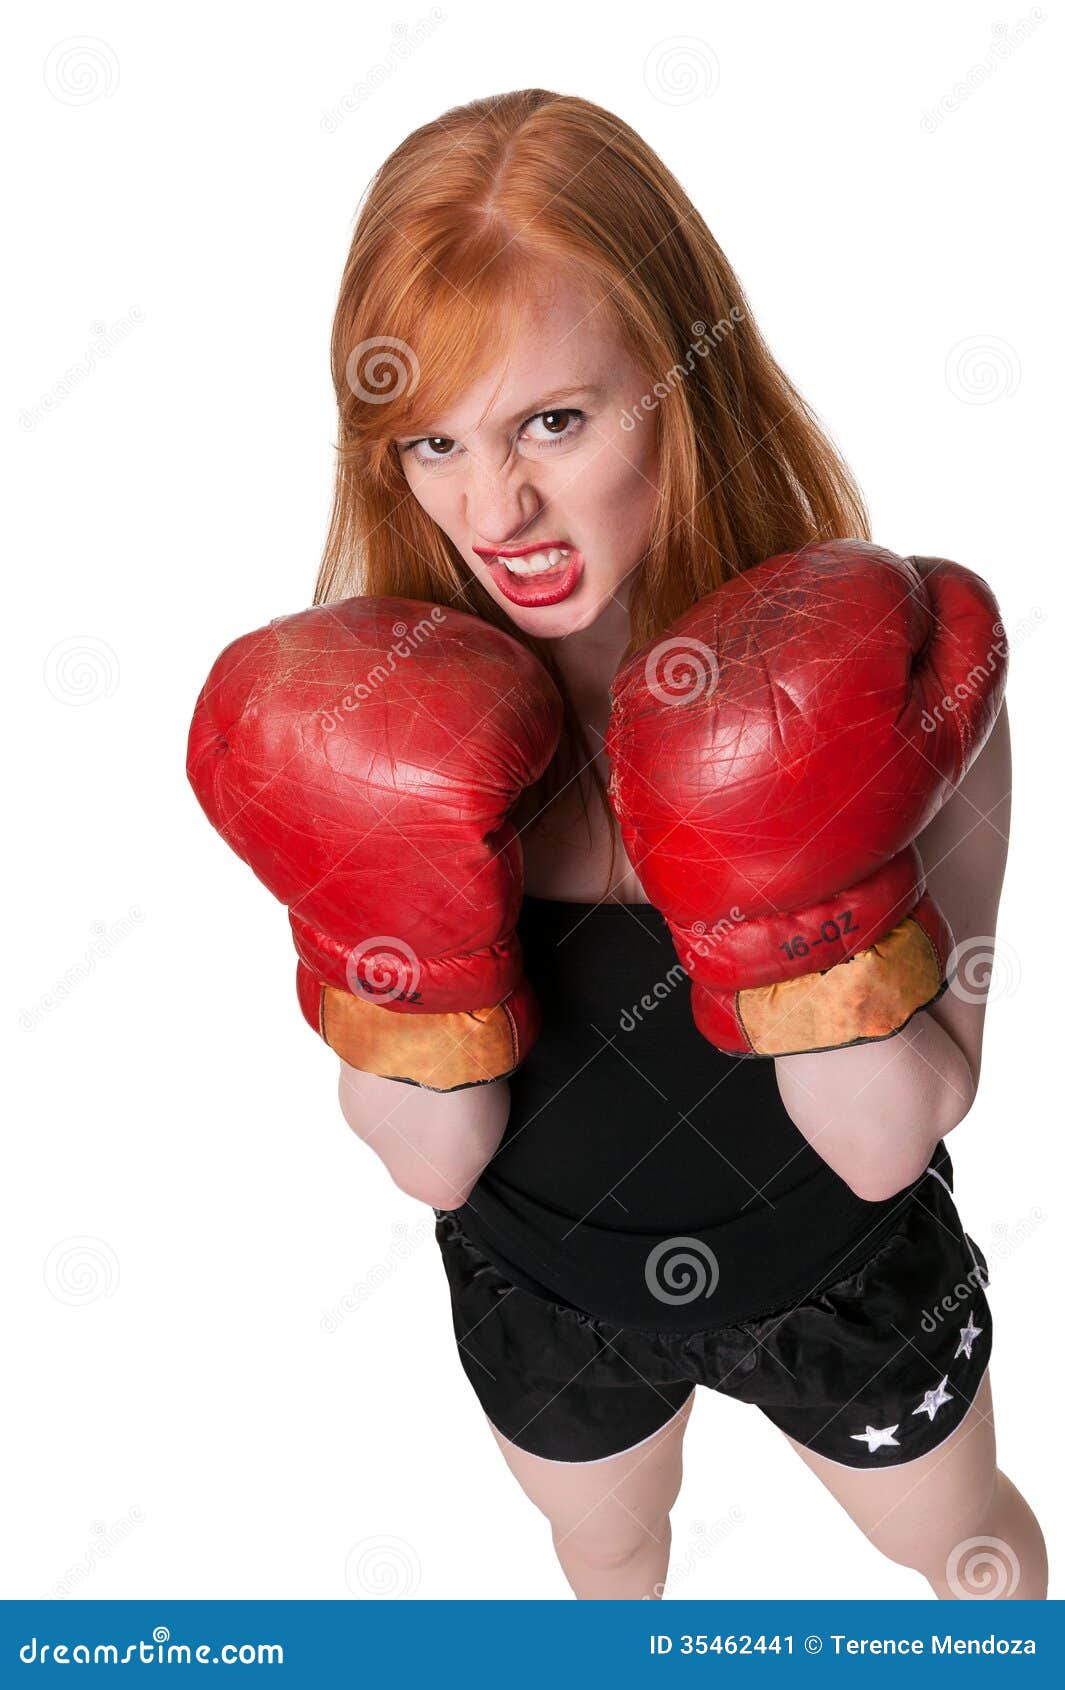 Aggressive Redhead Woman Boxer Image - Image of glove, boxing: 35462441